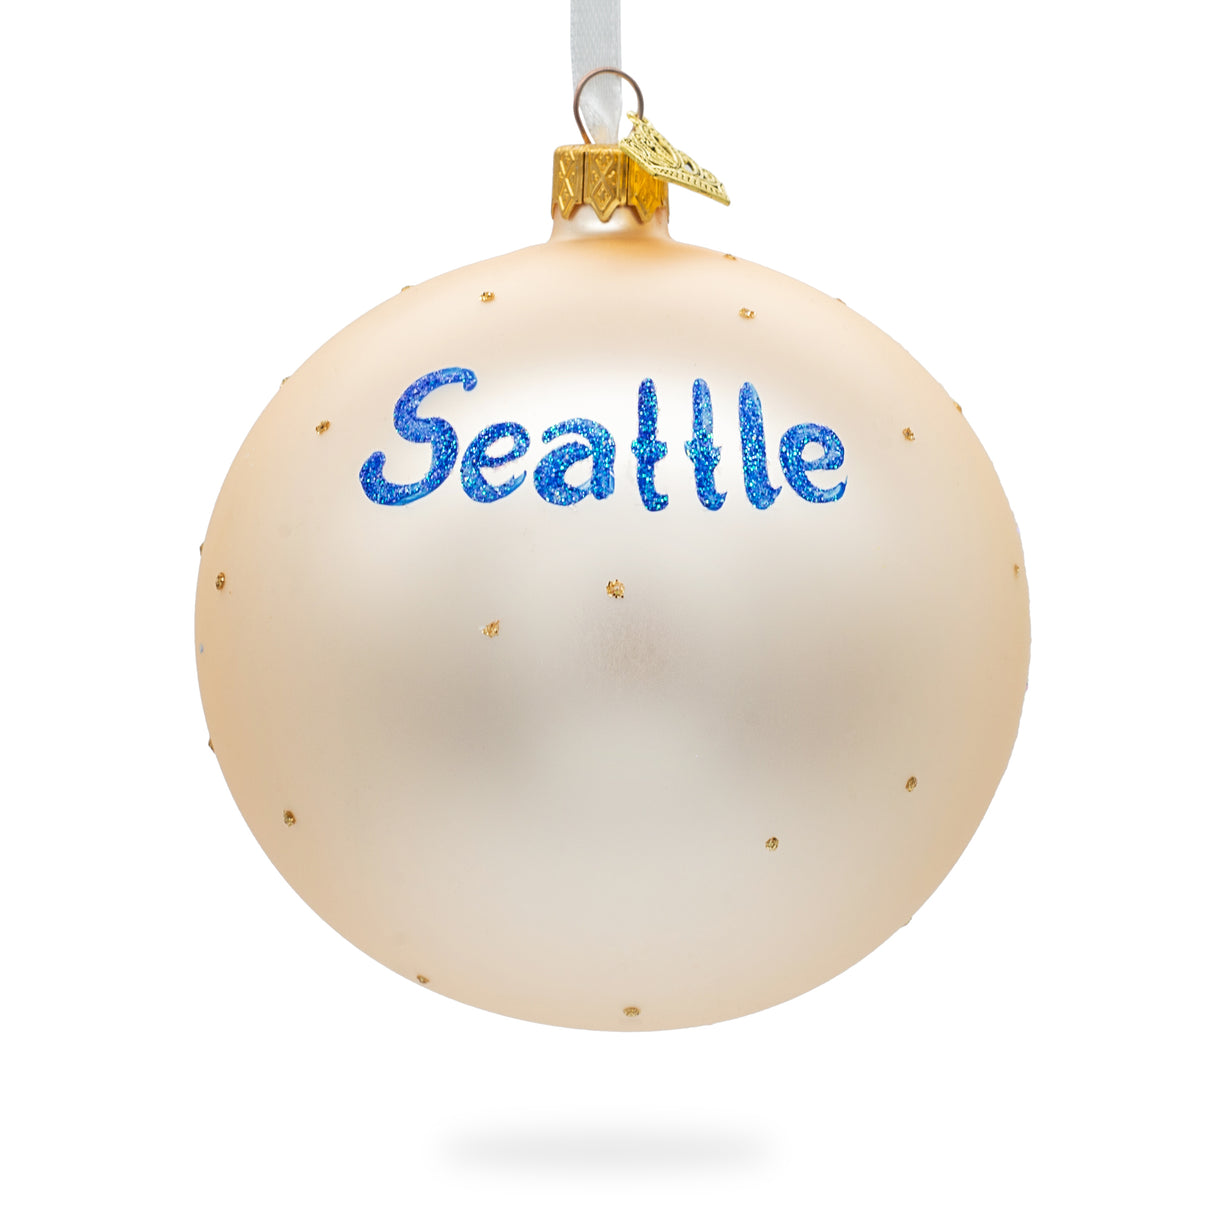 Buy Christmas Ornaments > Travel > North America > USA > Washington > Seattle by BestPysanky Online Gift Ship